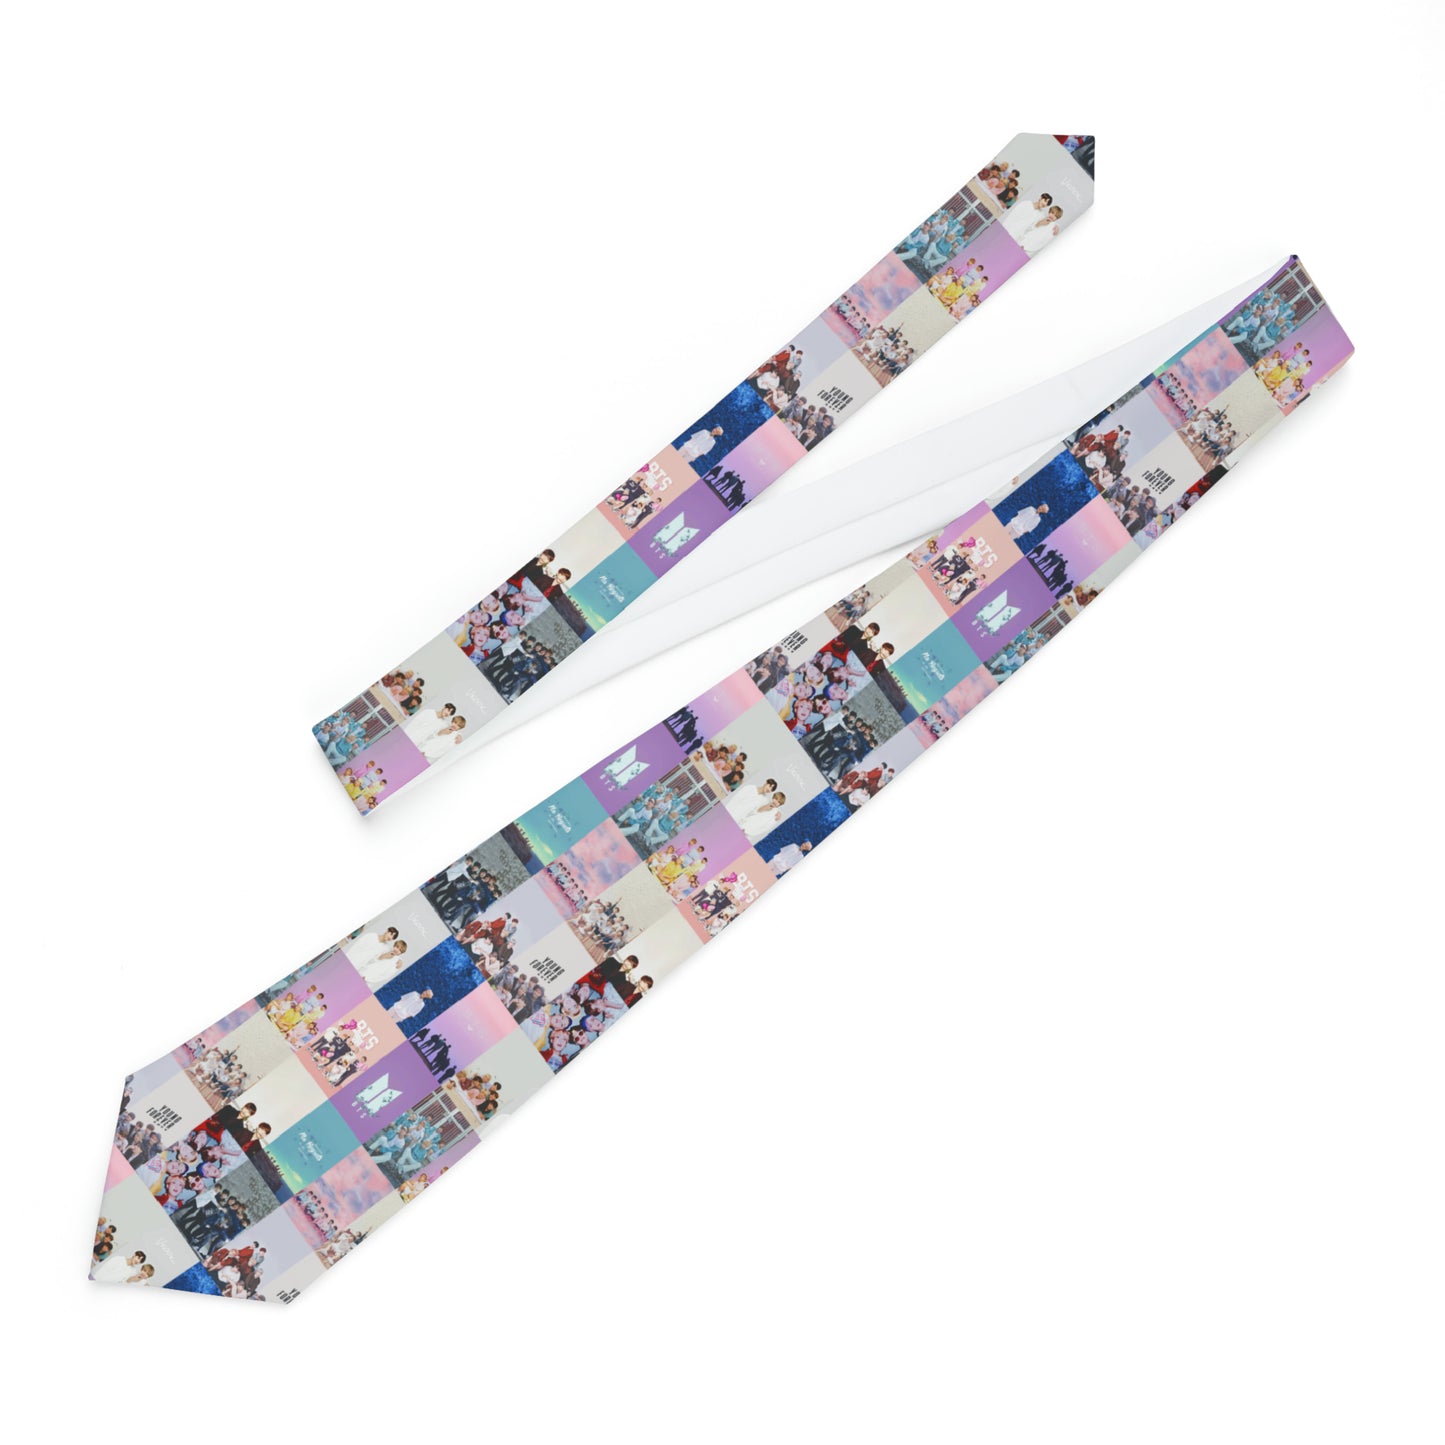 BTS Pastel Aesthetic Collage Necktie